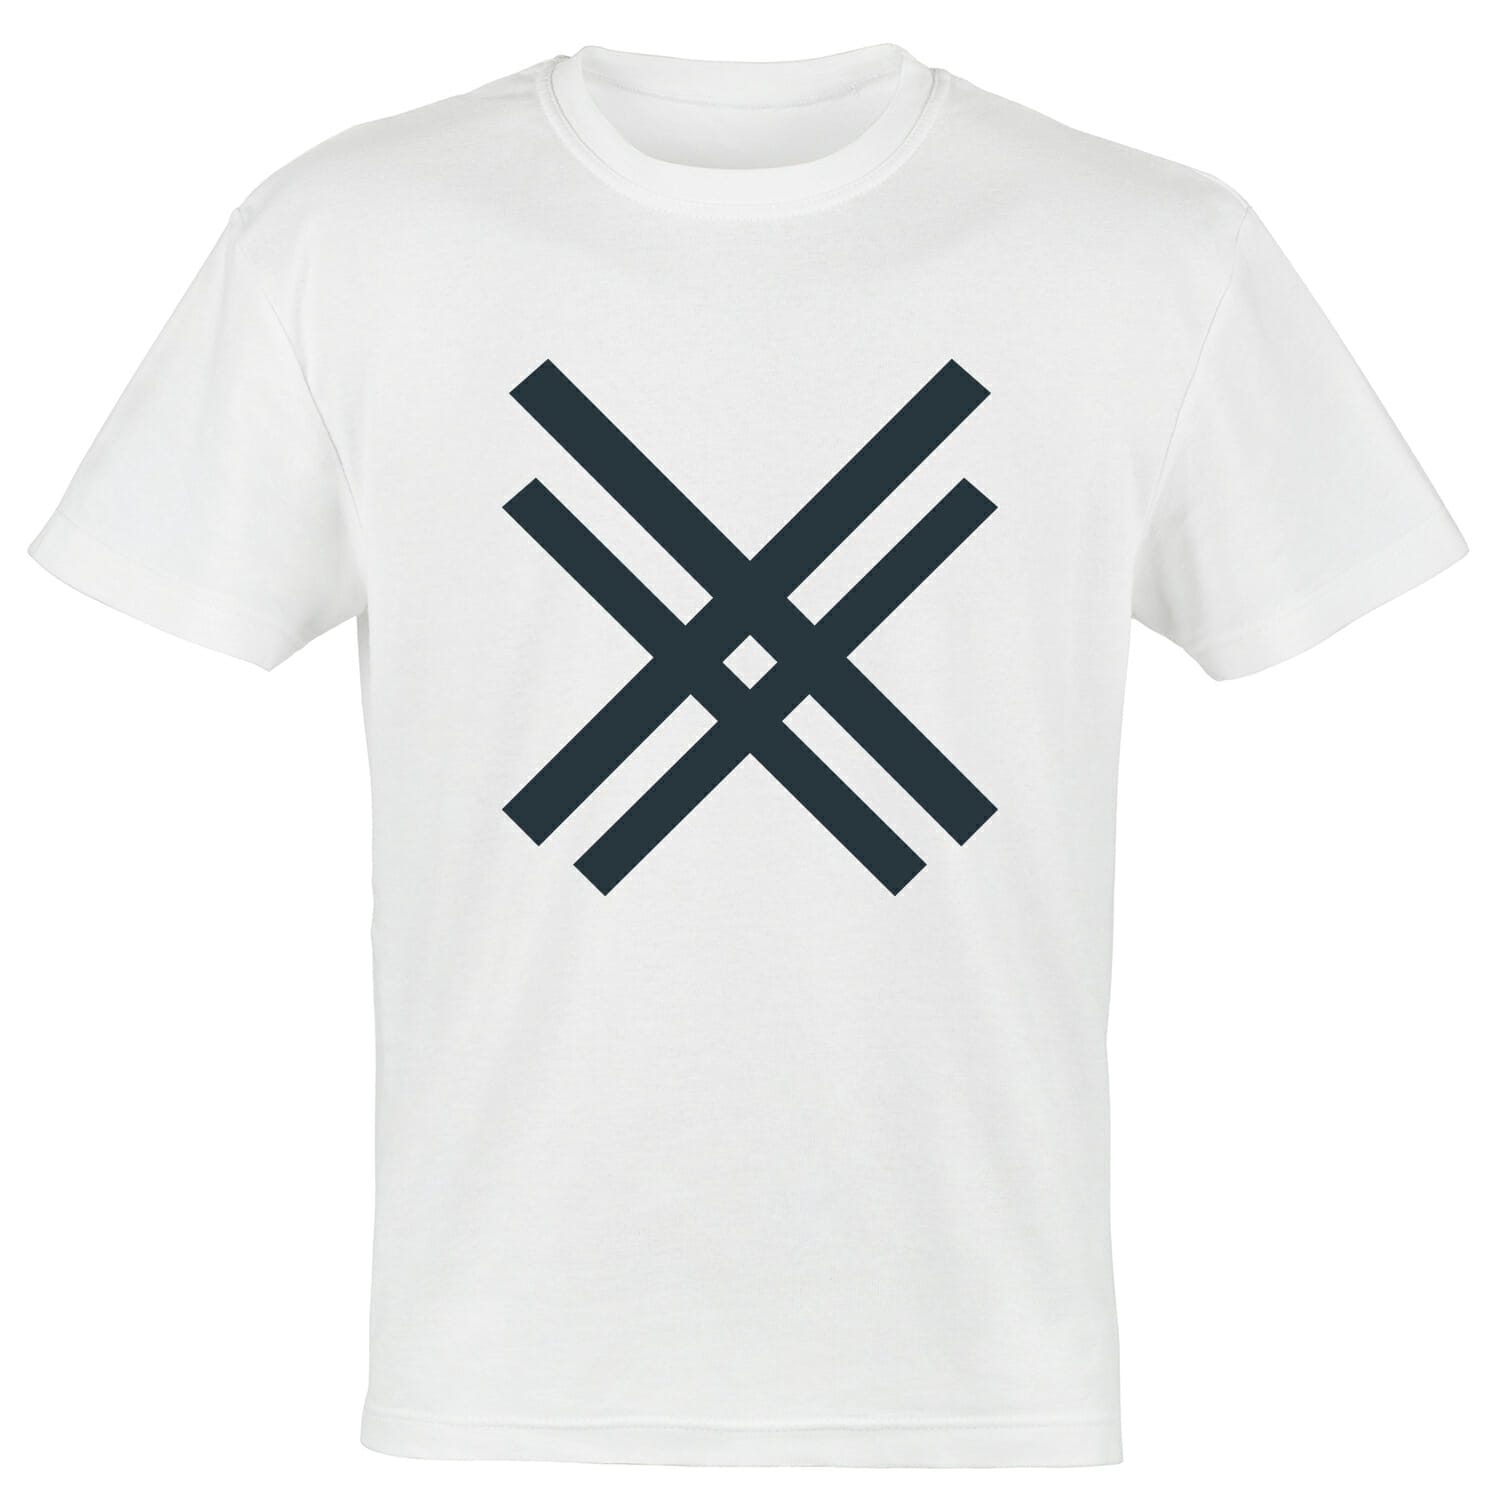 simply double cross tshirt design